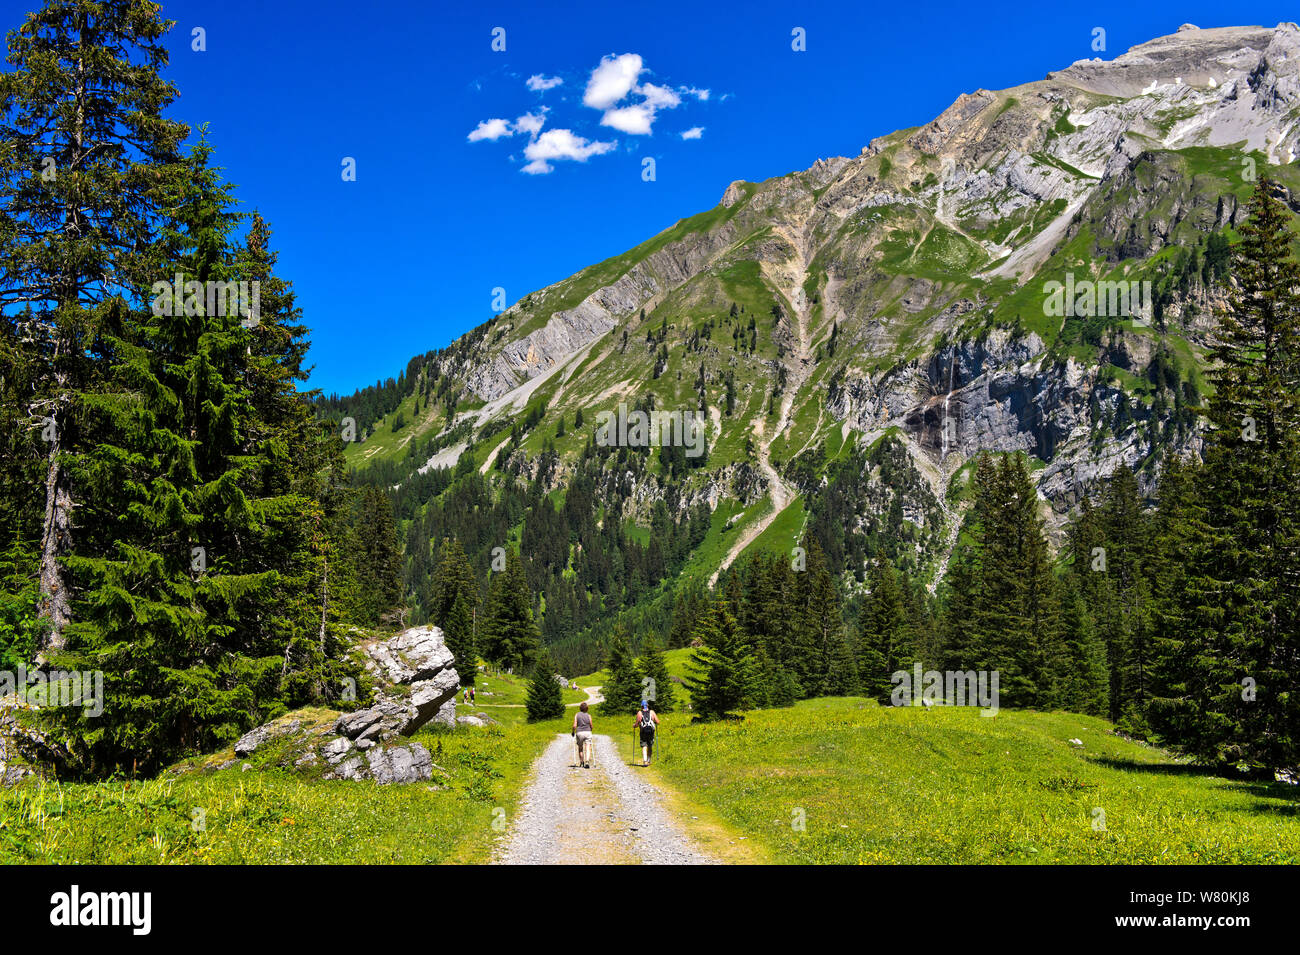 Wandern im Tal Iffigtal, Naturschutzgebiet Gelten-Iffigen, Lenk, Schweiz  Stockfotografie - Alamy